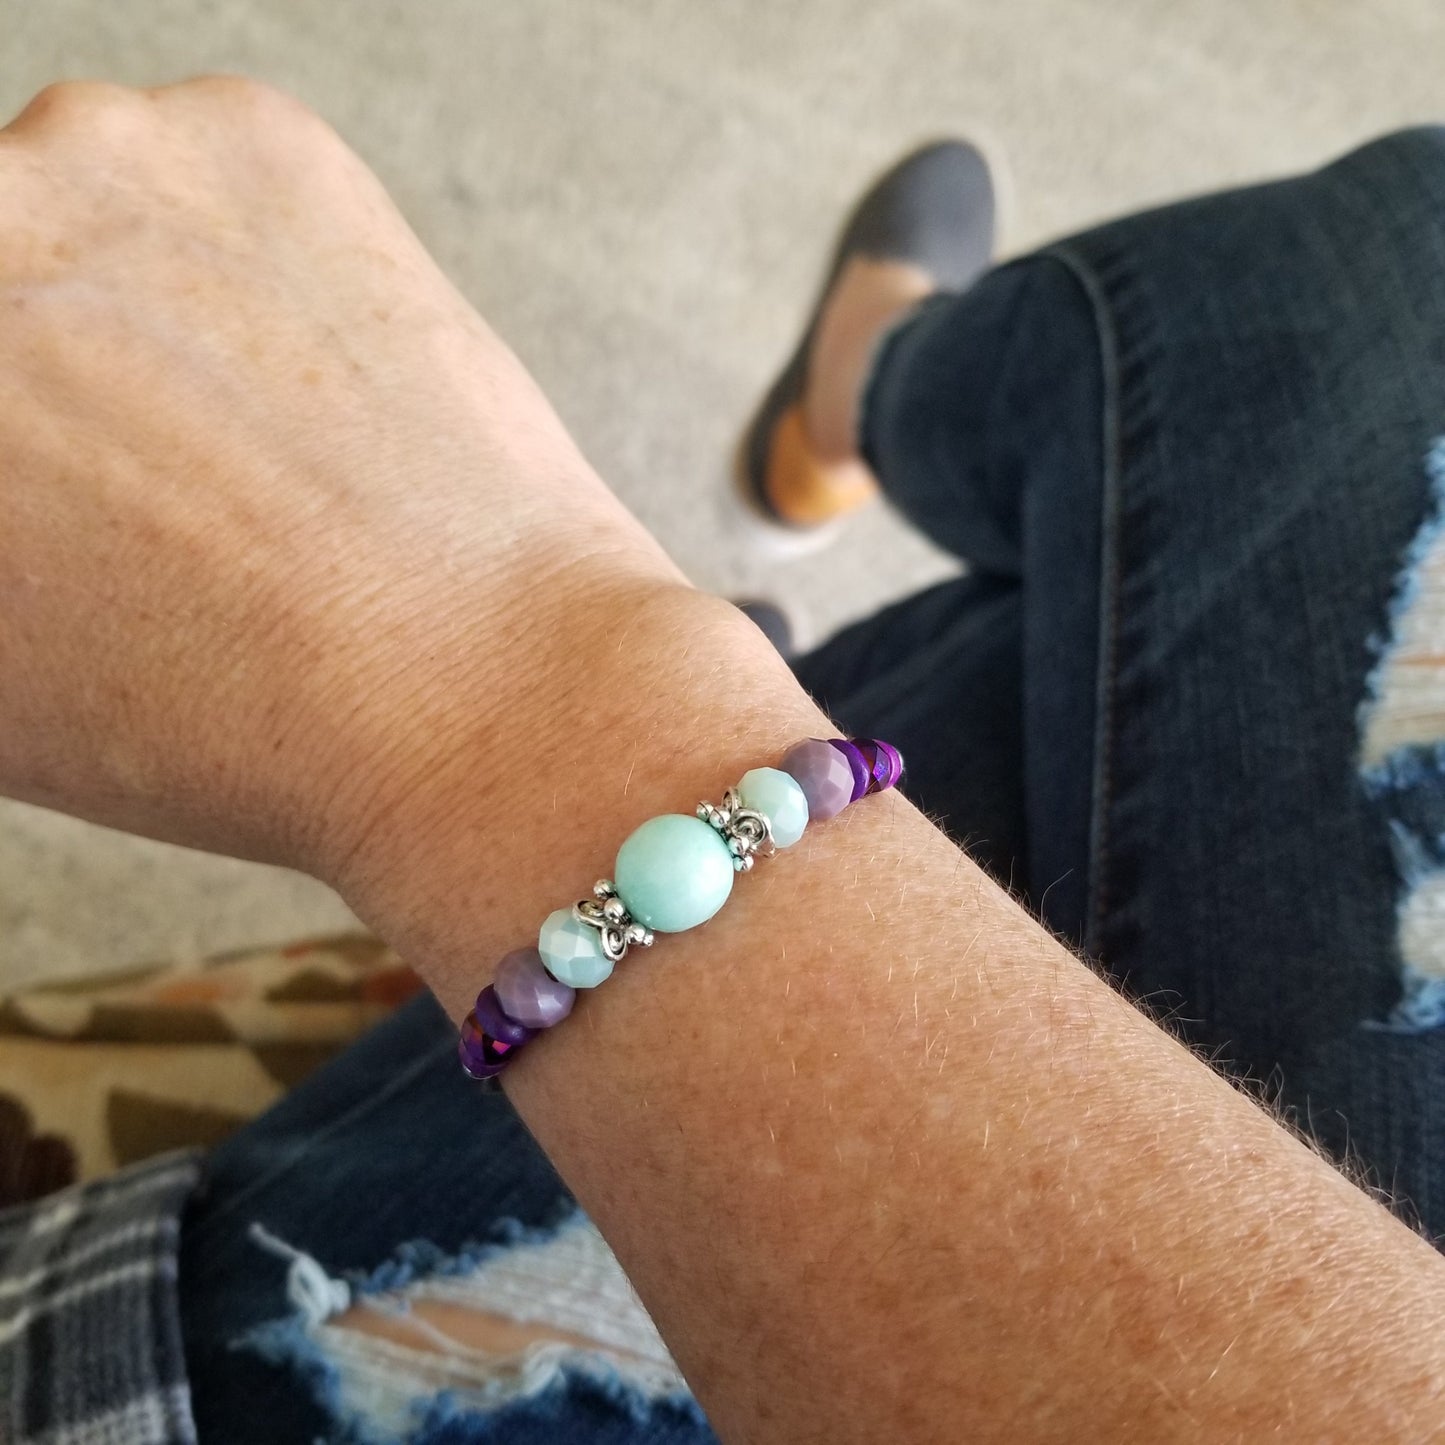 Seafoam riverstone with coordinating purple beads wrap bracelet on wrist